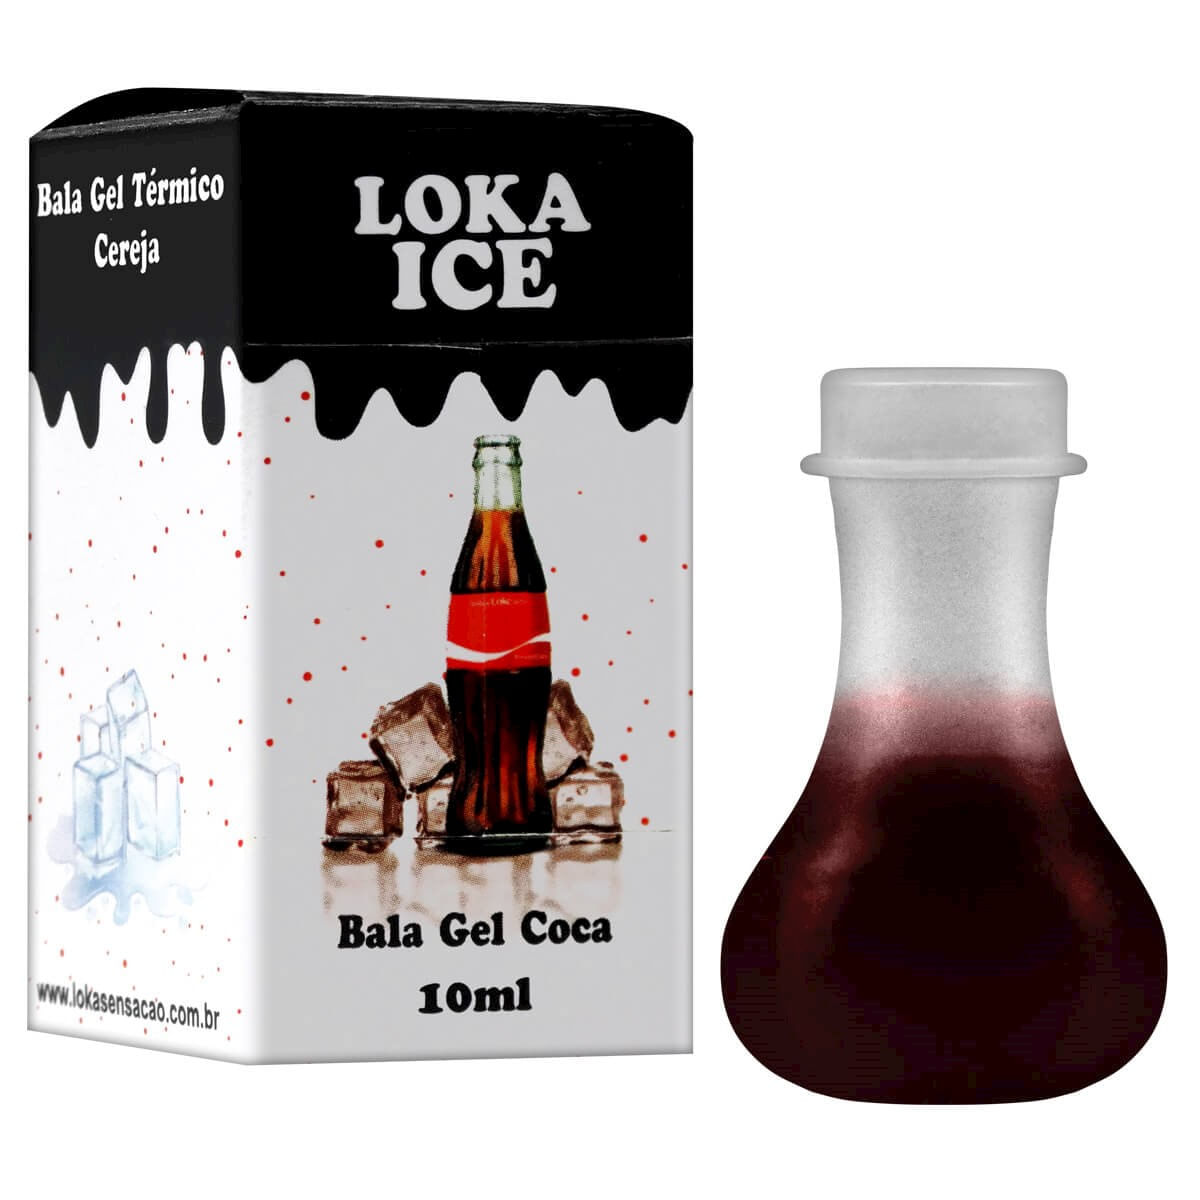 Bala Gel Comestível Loka Ice 10ml Loka Sensação